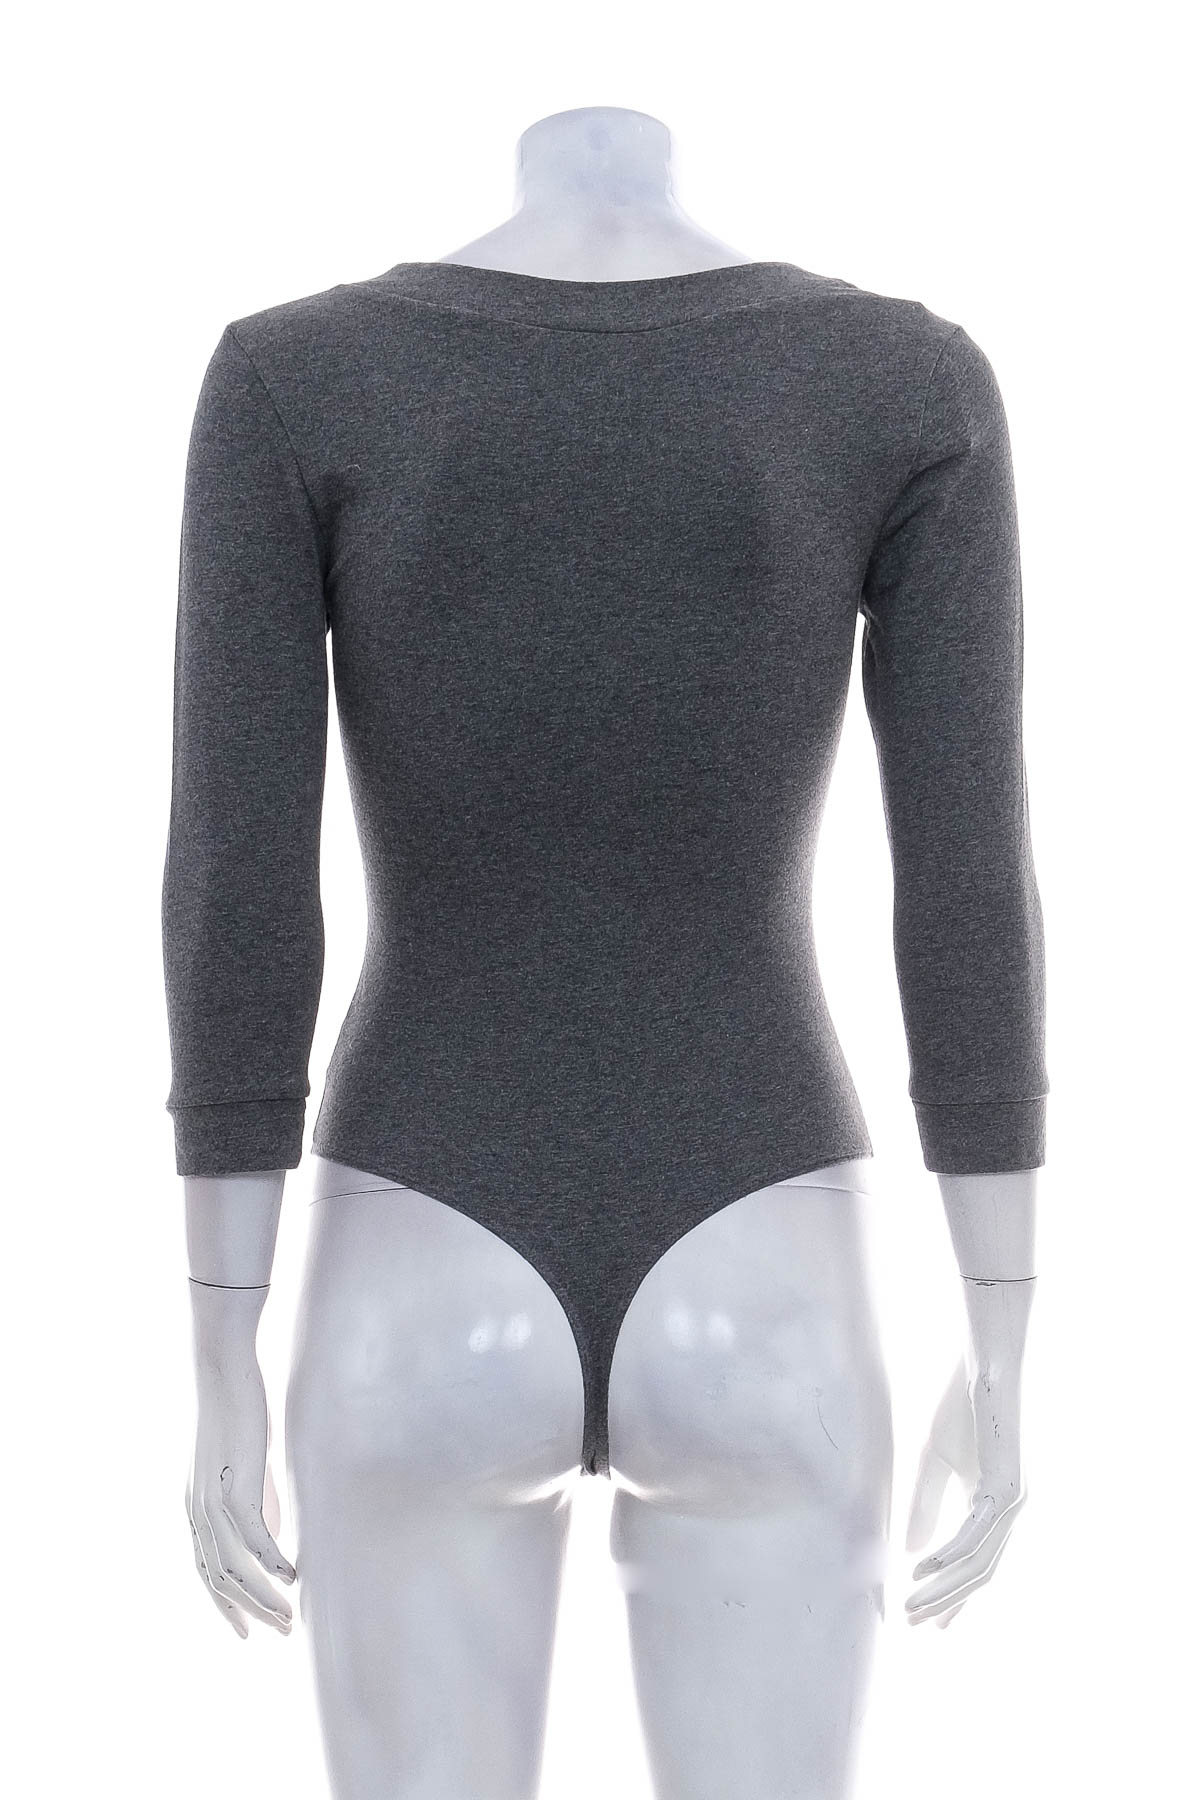 Woman's bodysuit - GAP - 1